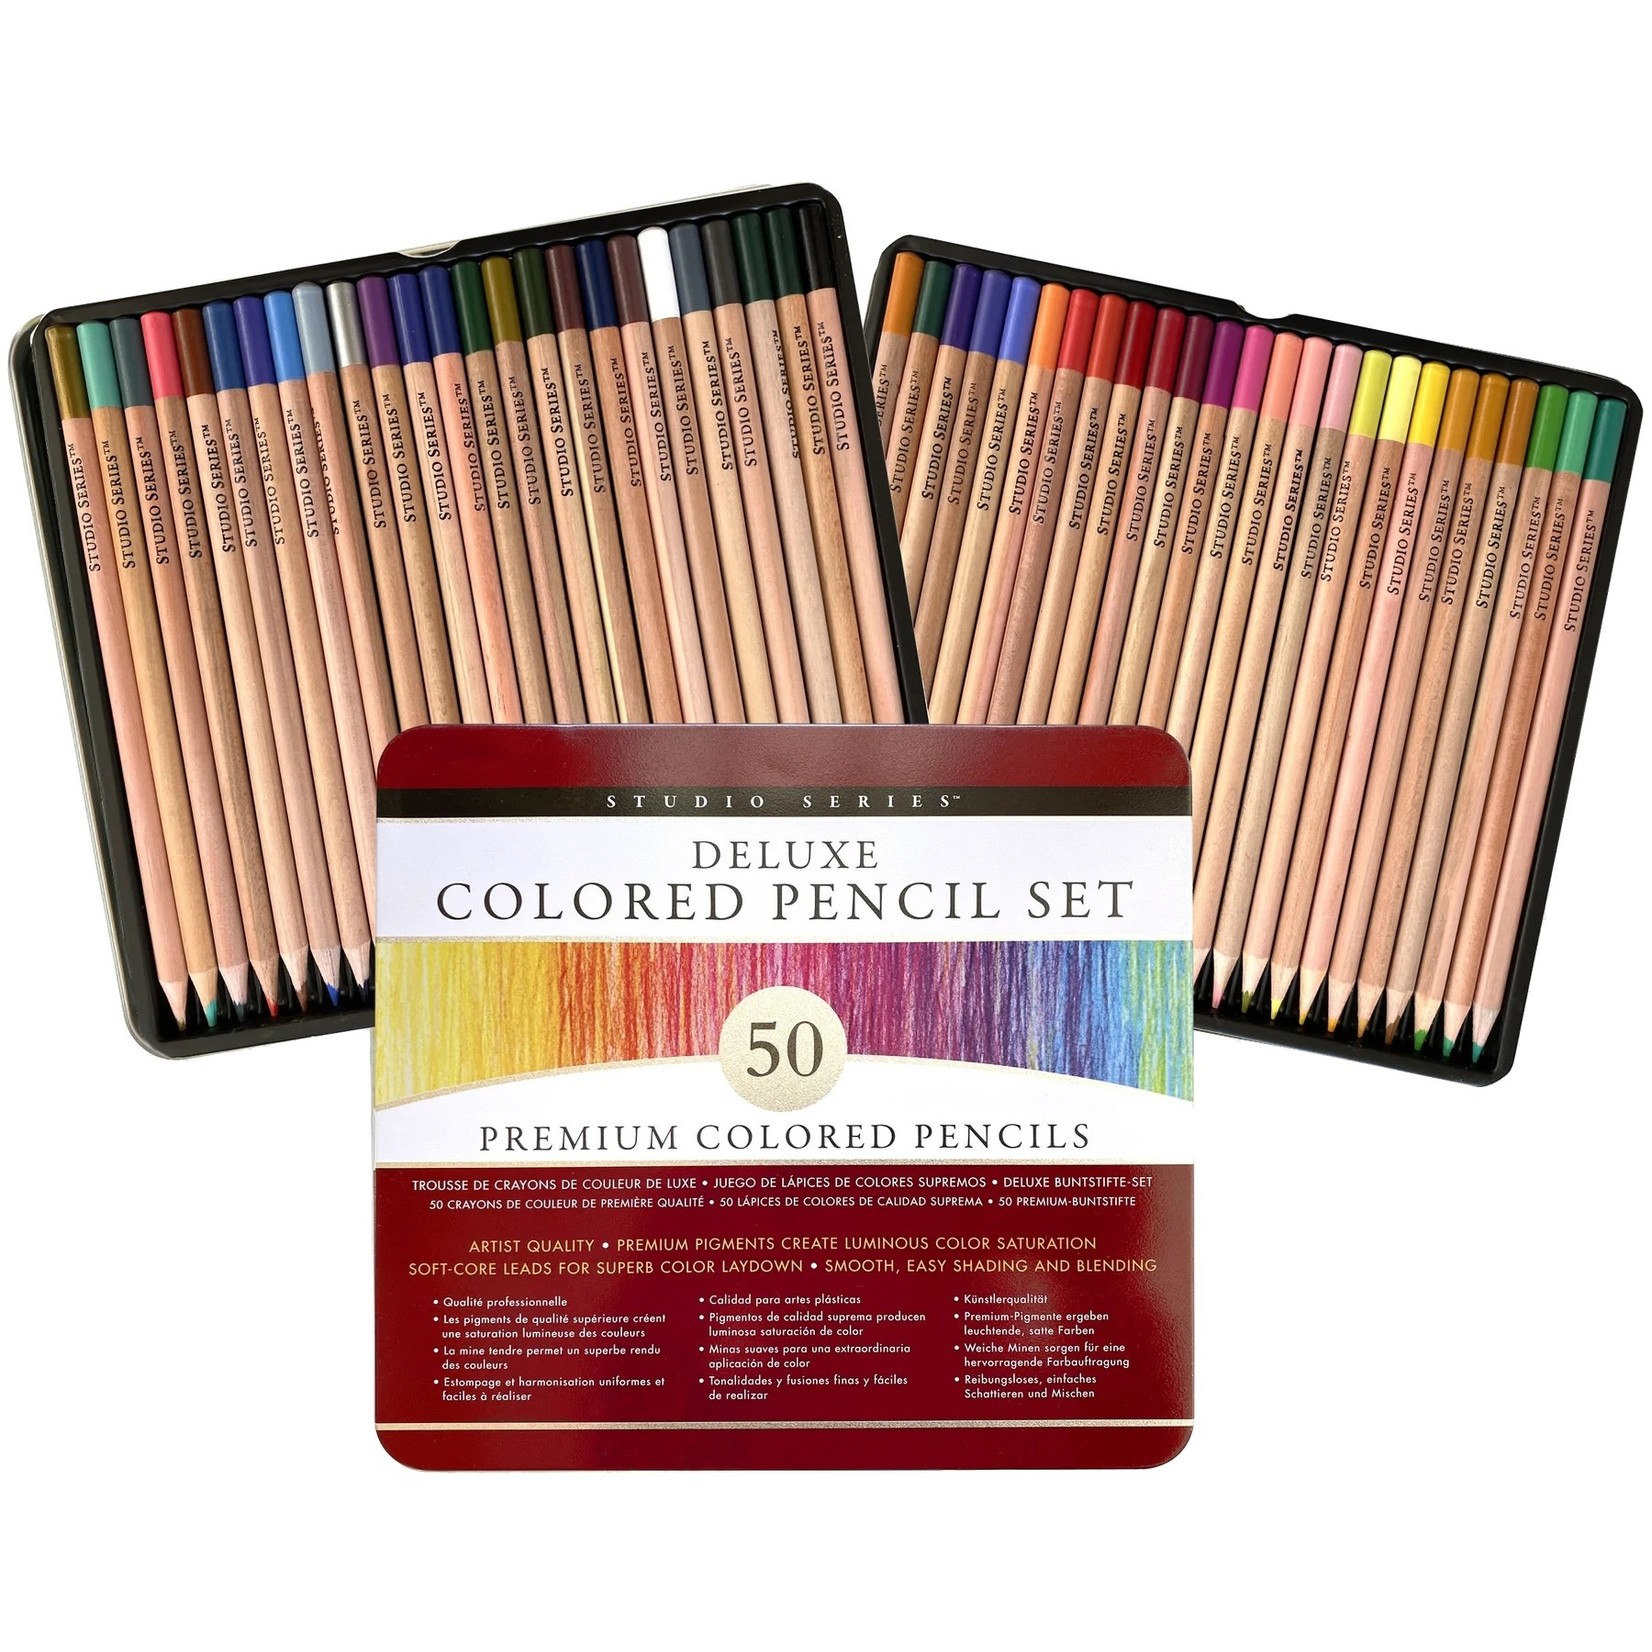 Peter Pauper Press Studio Series Deluxe Colored Pencil Set (Set of 50)